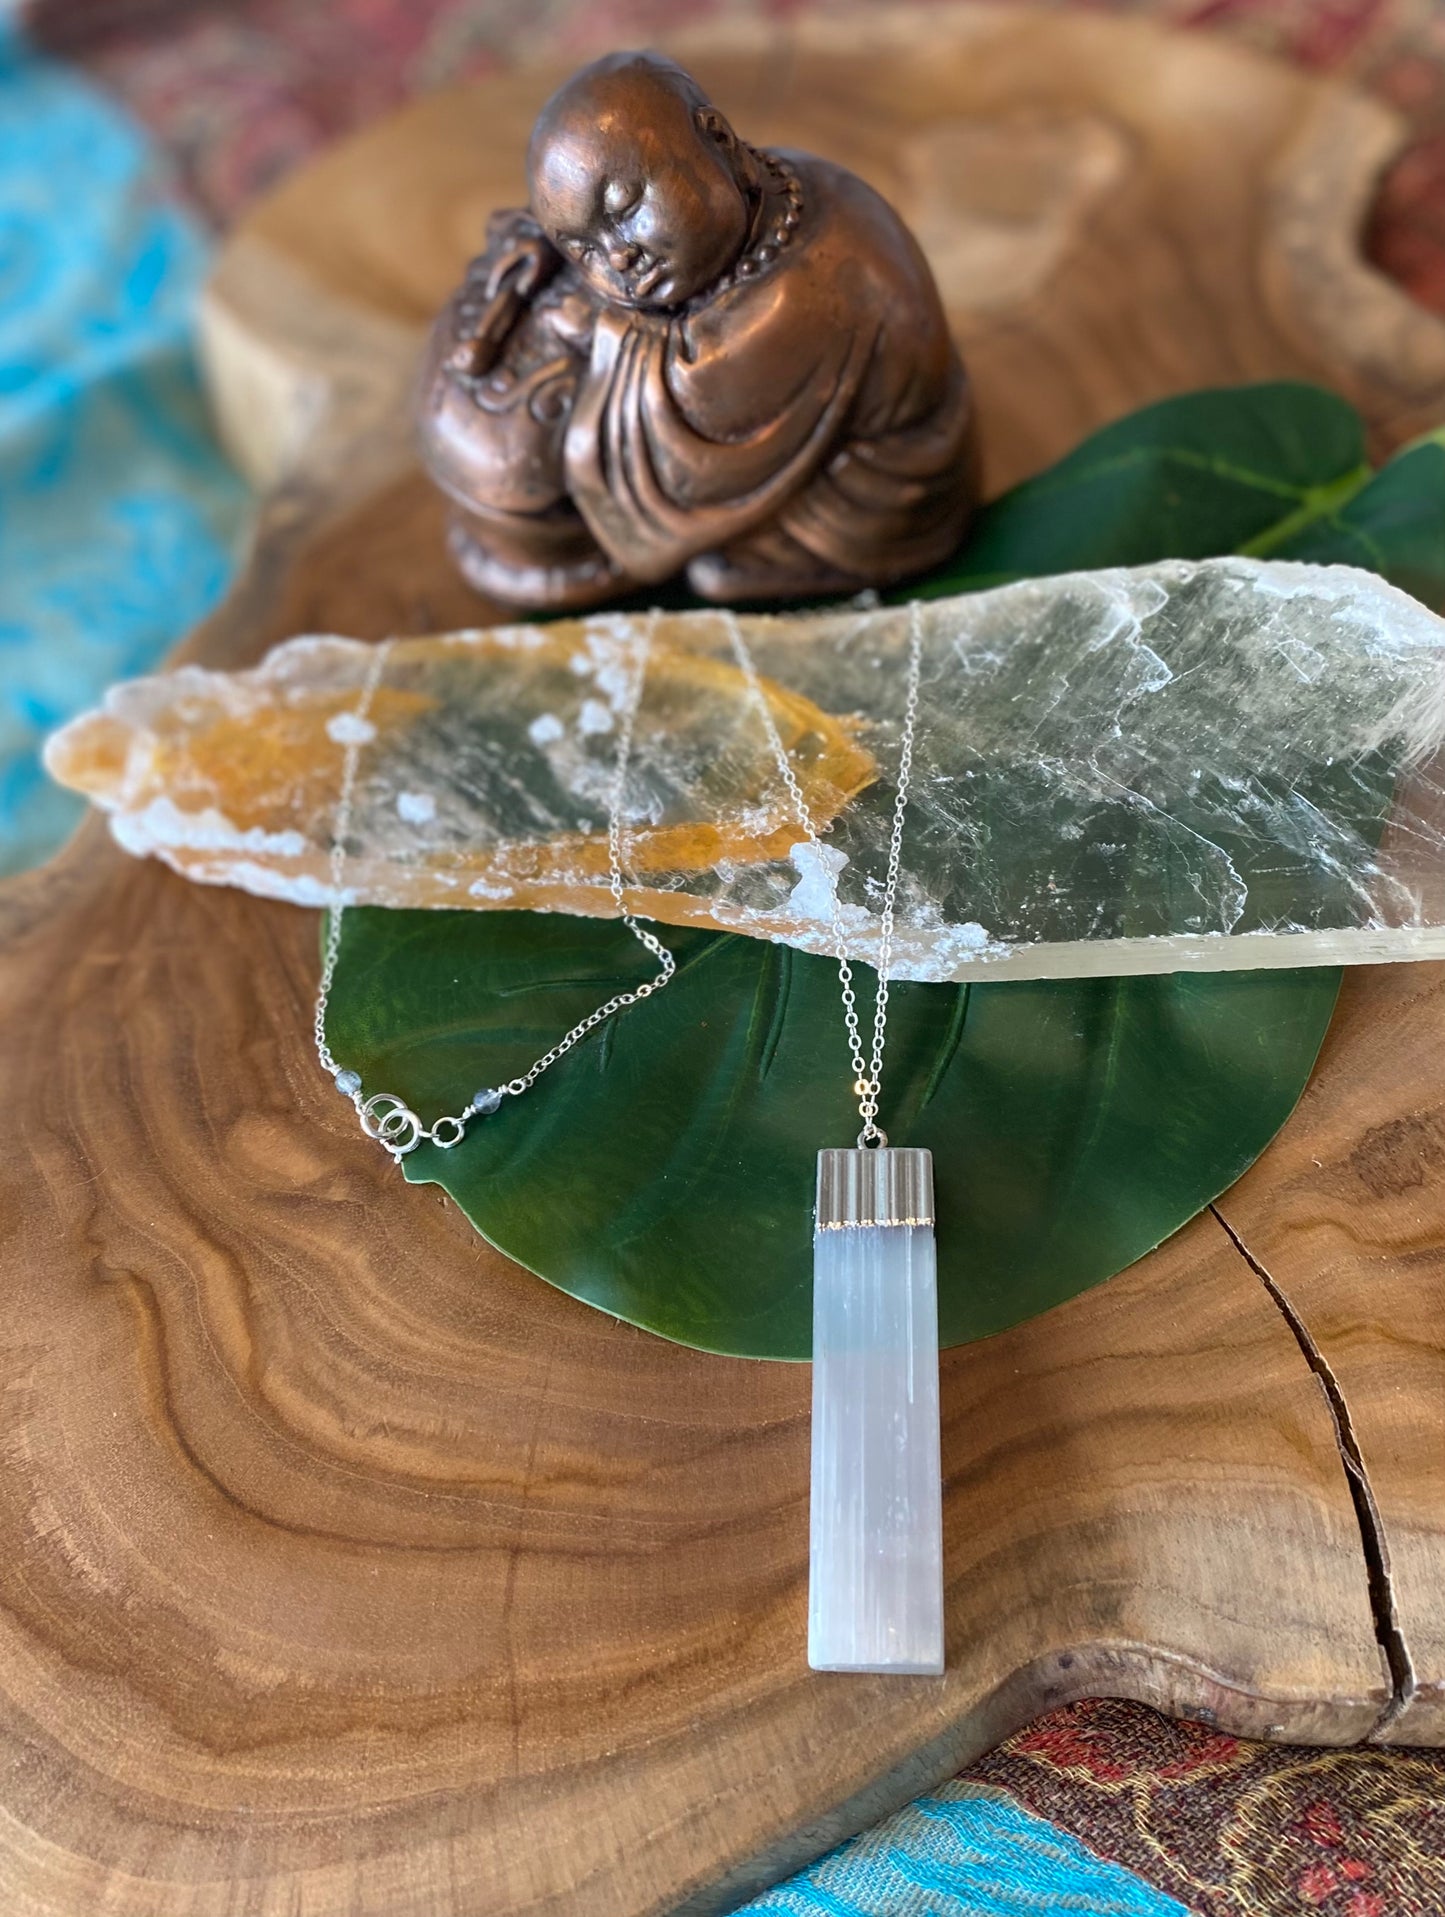 Selenite Crystal Healing Necklace